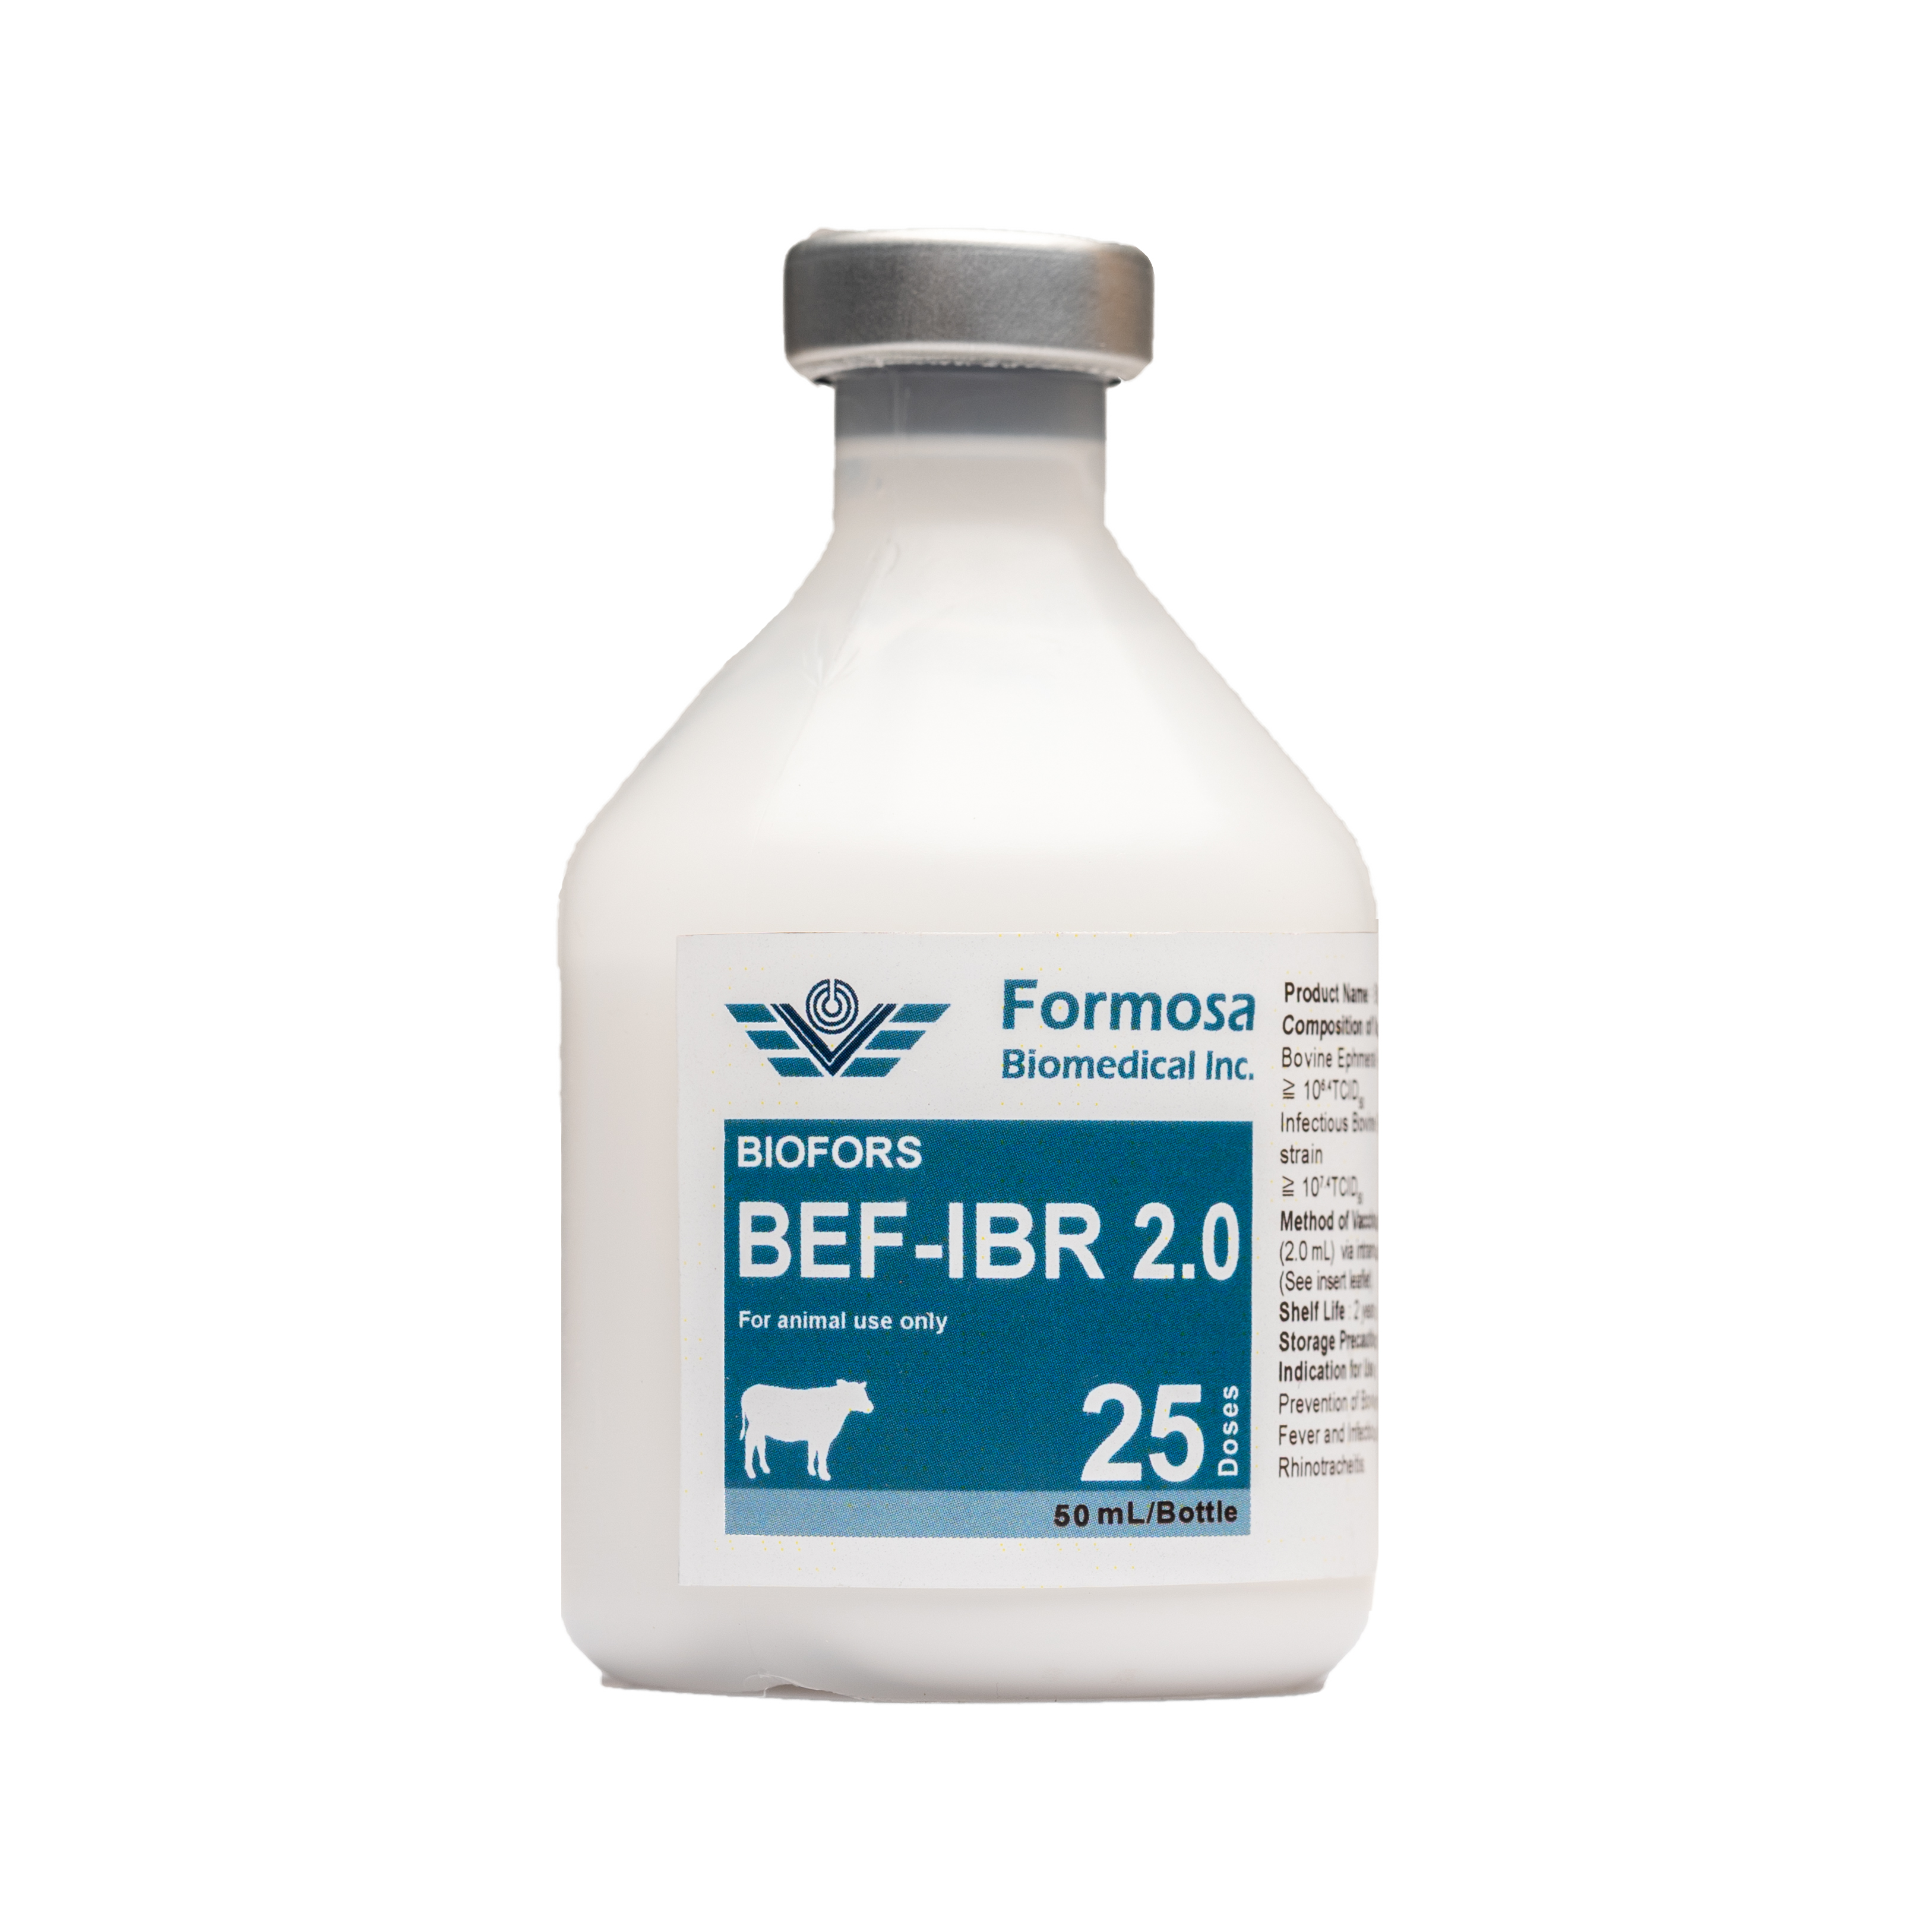 BIOFORS BEF-IBR 2.0